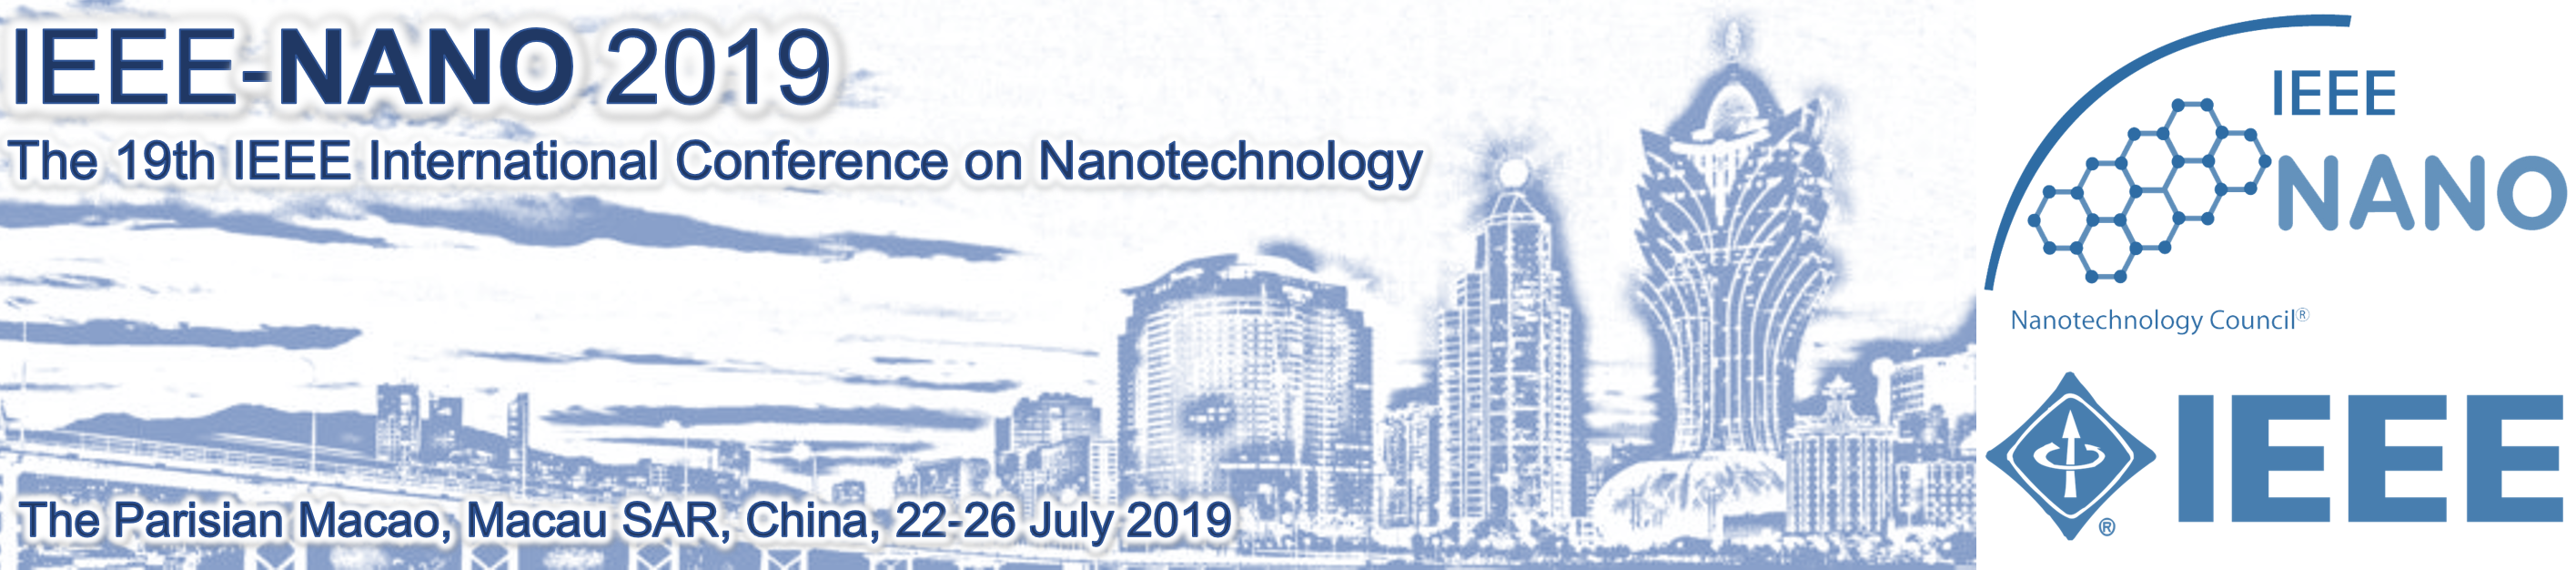 IEEE NANO 2019